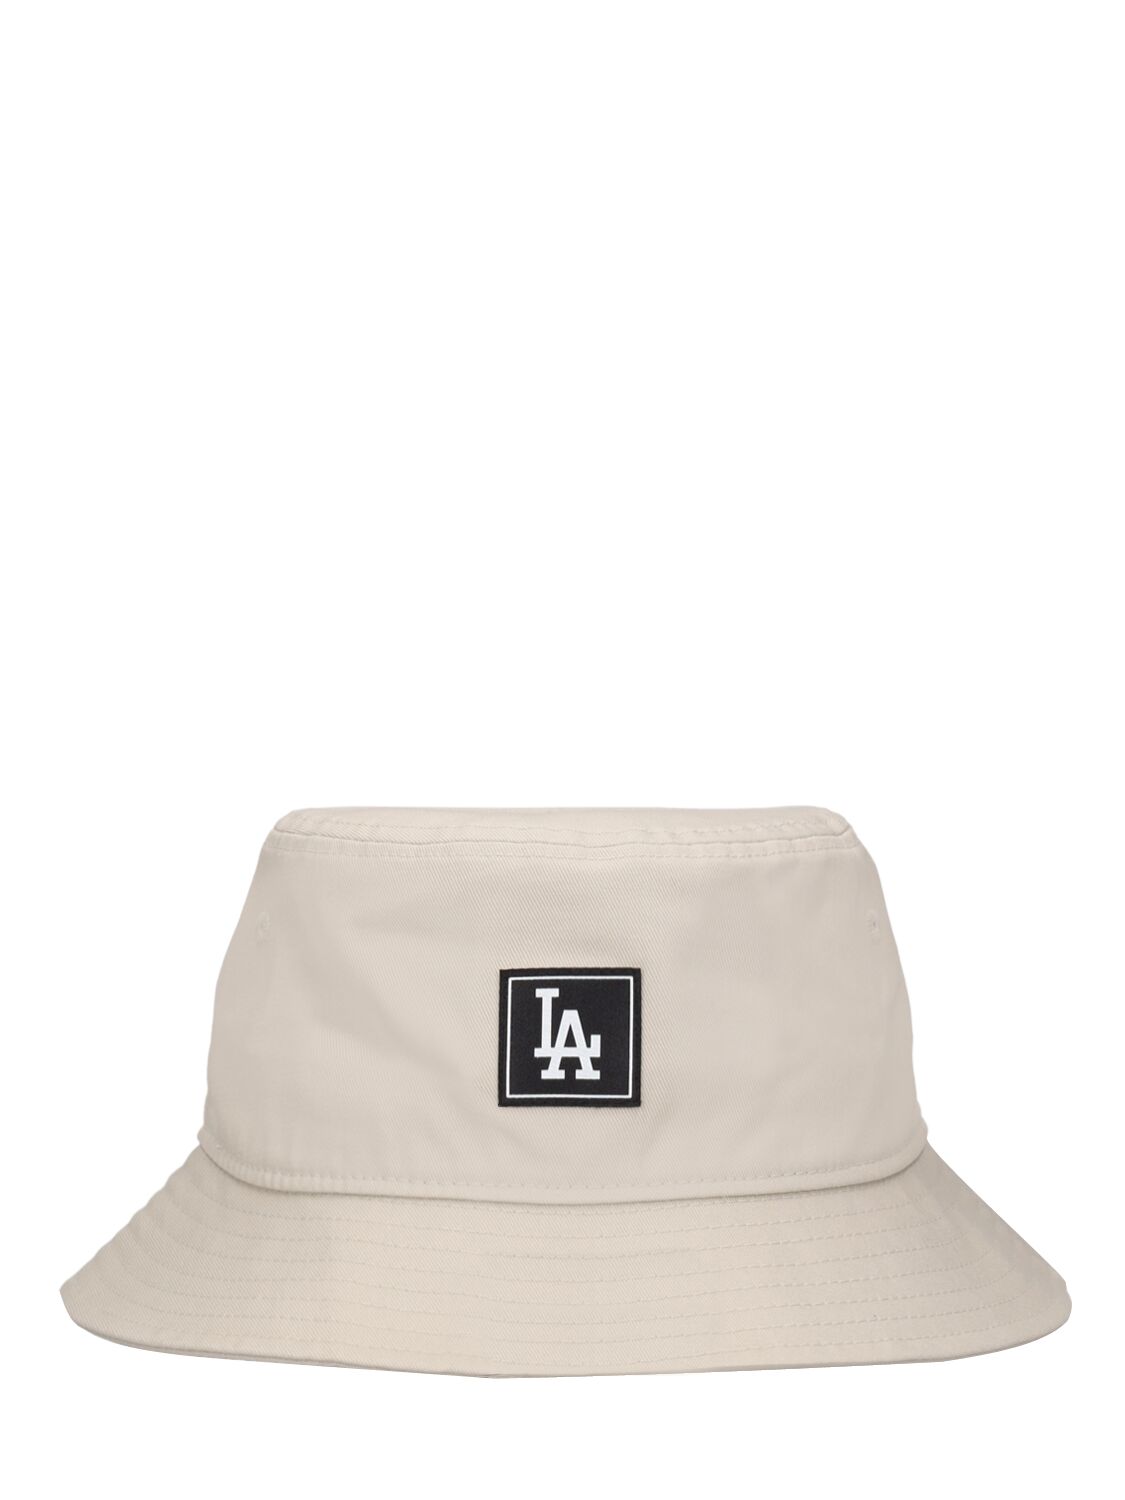 ERA | Closet La Bucket Hat Smart NEW Tapered Dodgers